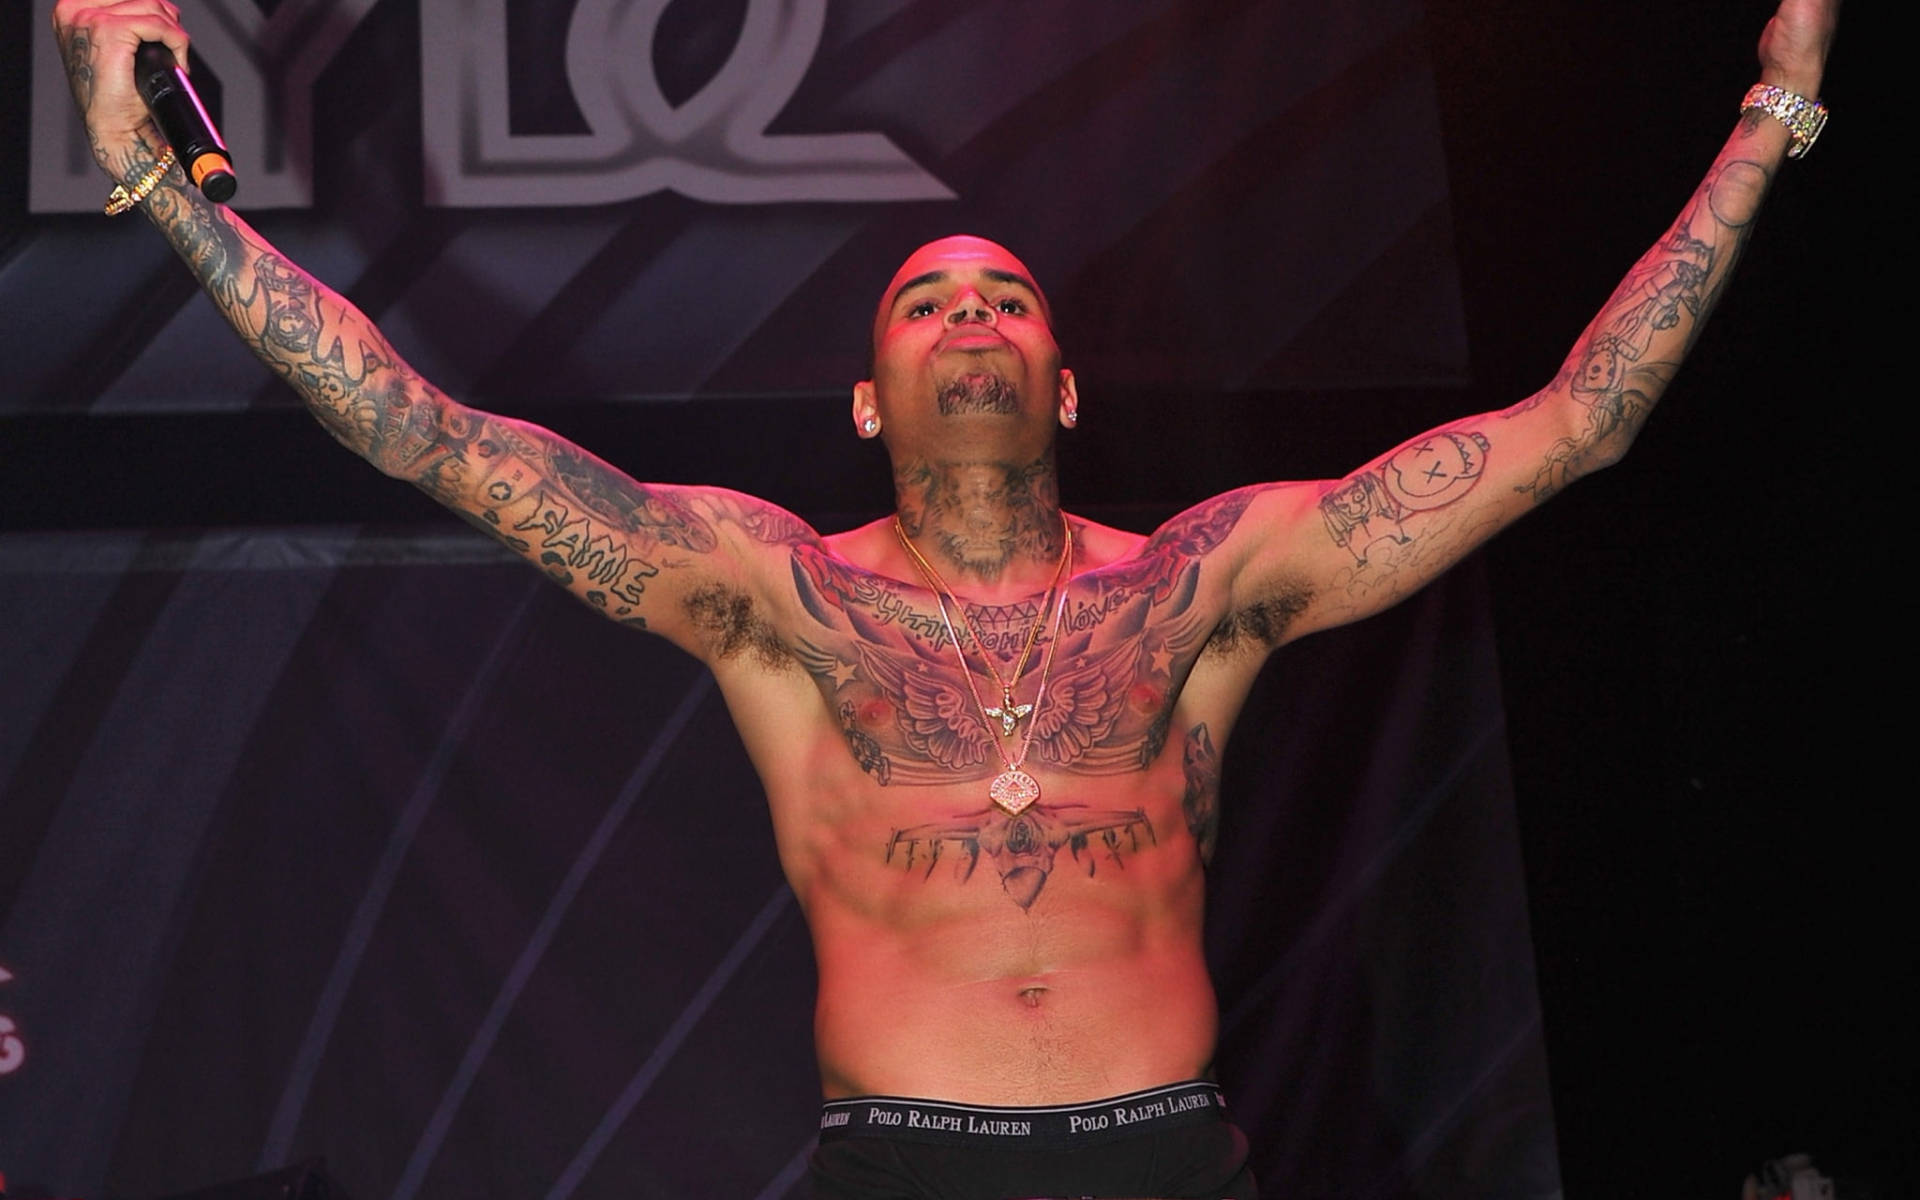 Chris Brown Tattoos Background